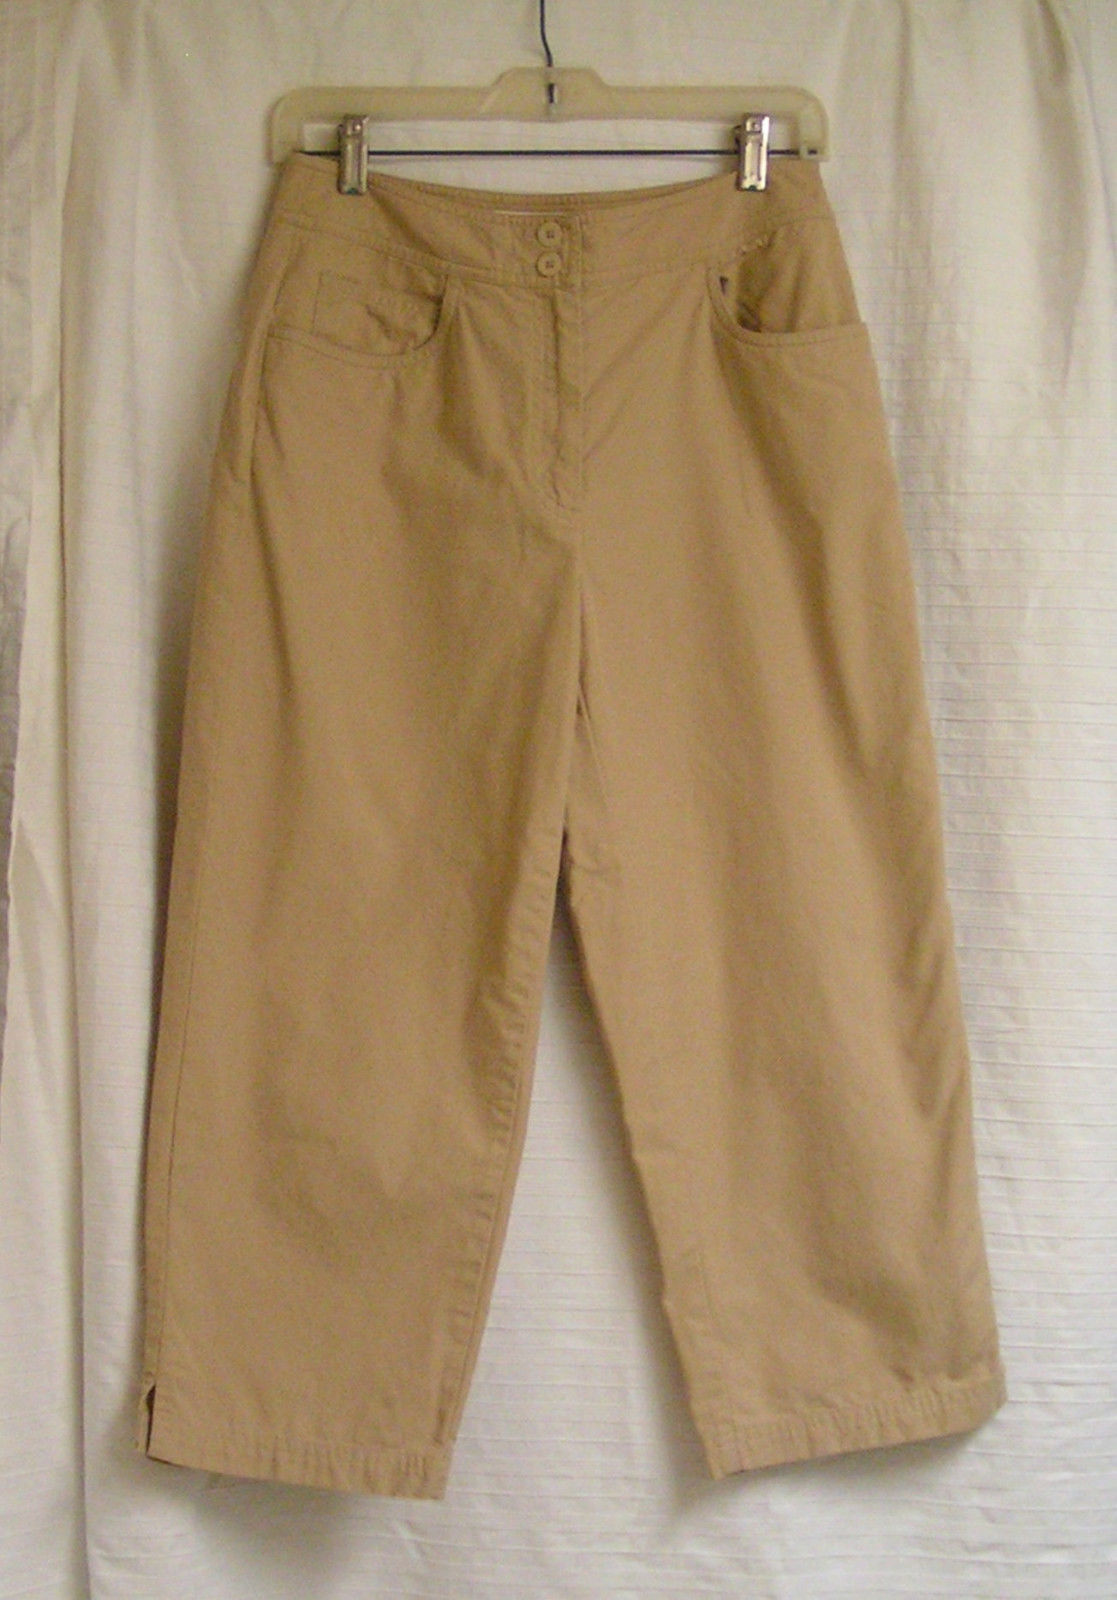 Talbots all Cotton Tan Capri Pants size 6P - Pants